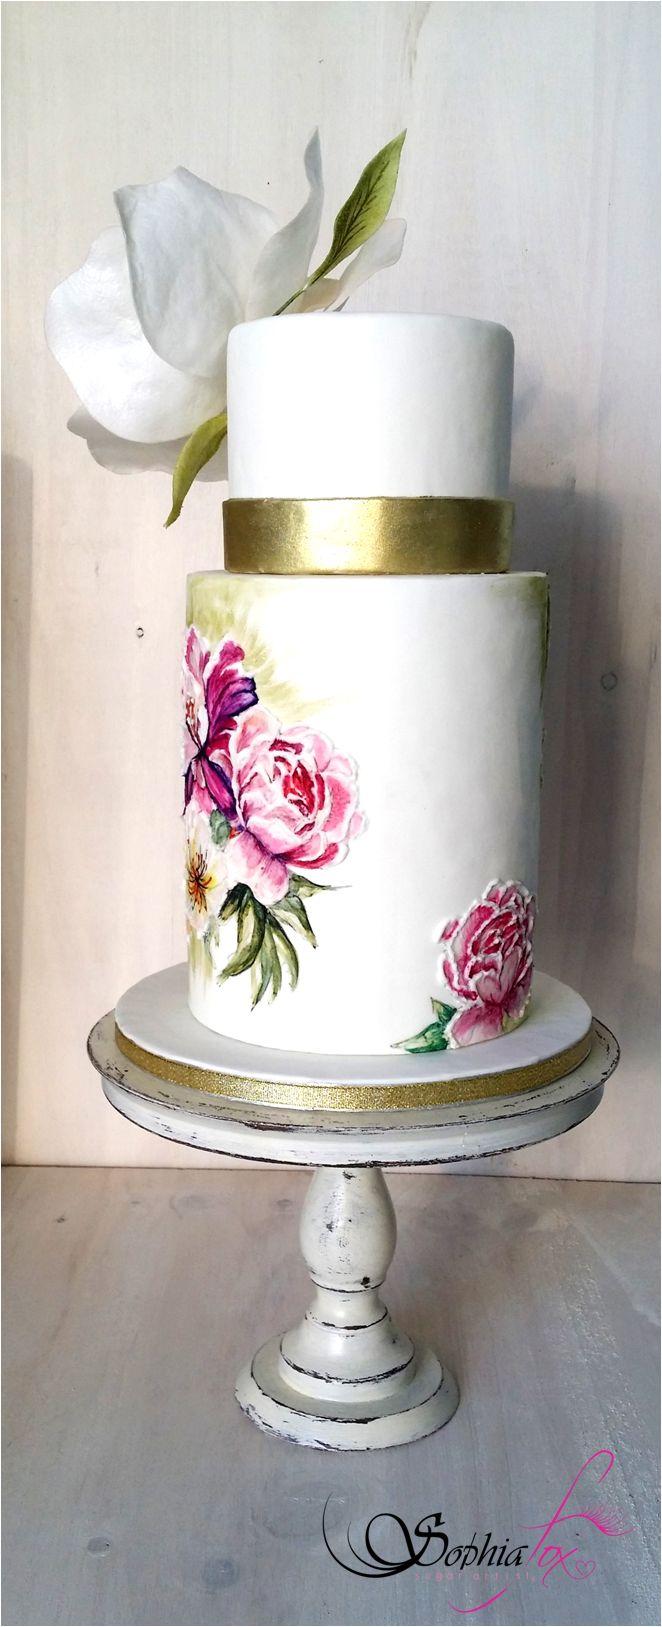 زفاف - Sophia Fox - Painted Cakes -